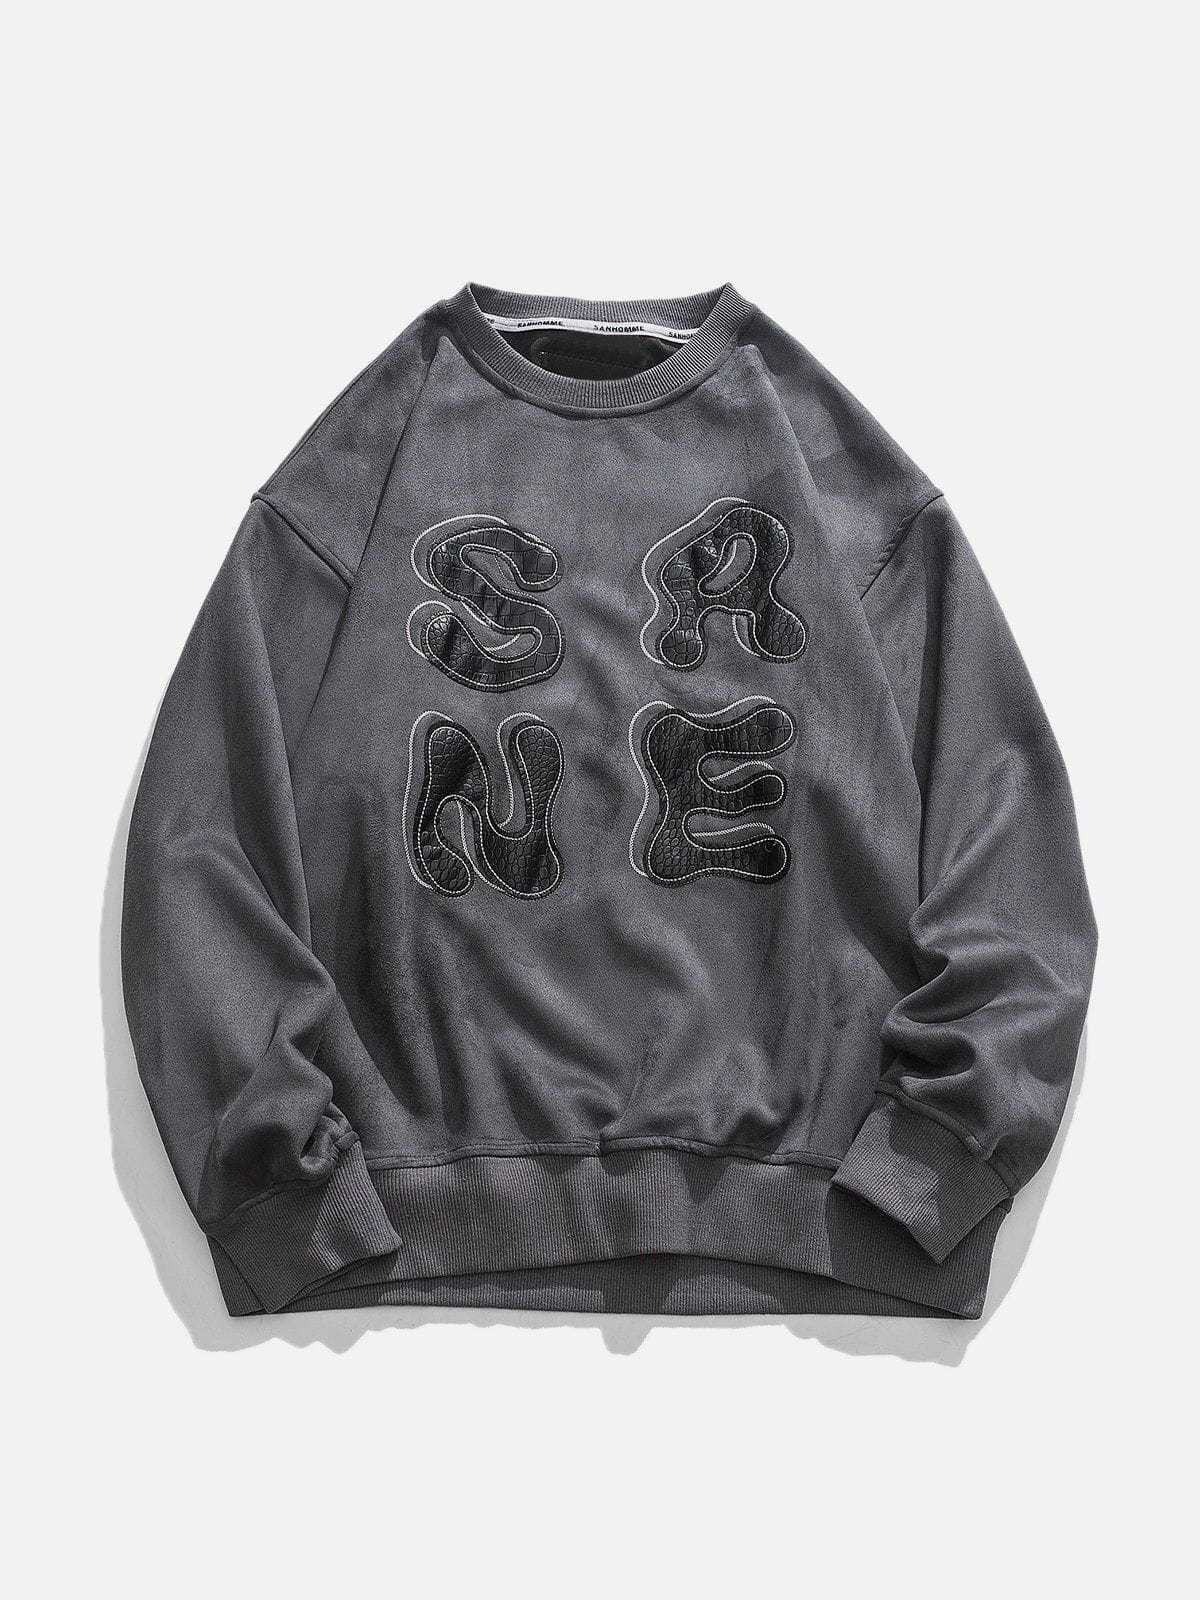 LUXENFY™ - "SRNE" Print Suede Sweatshirt luxenfy.com